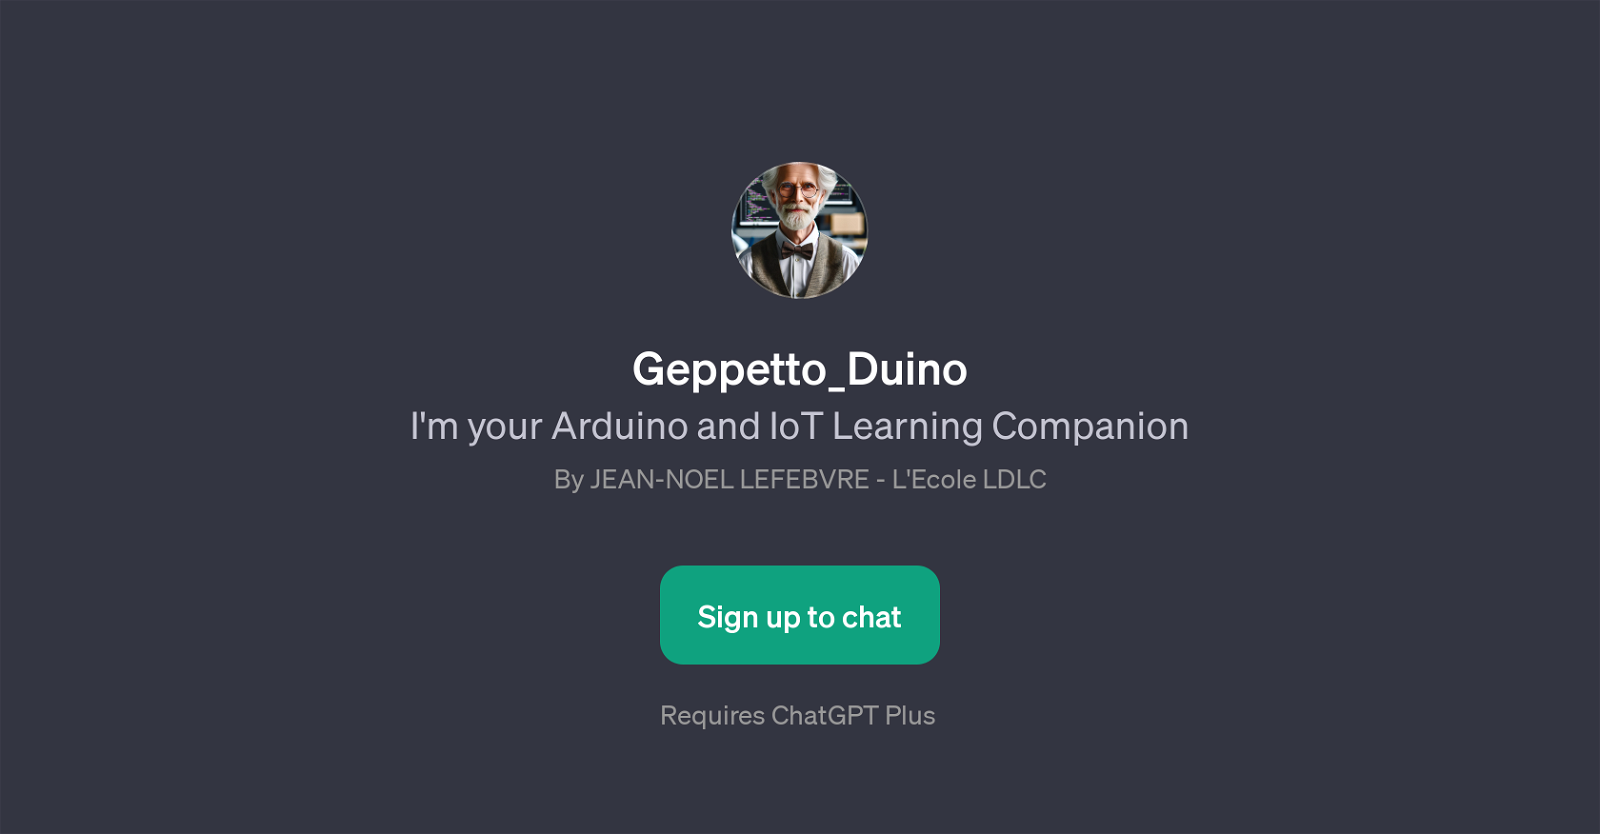 Geppetto_Duino website